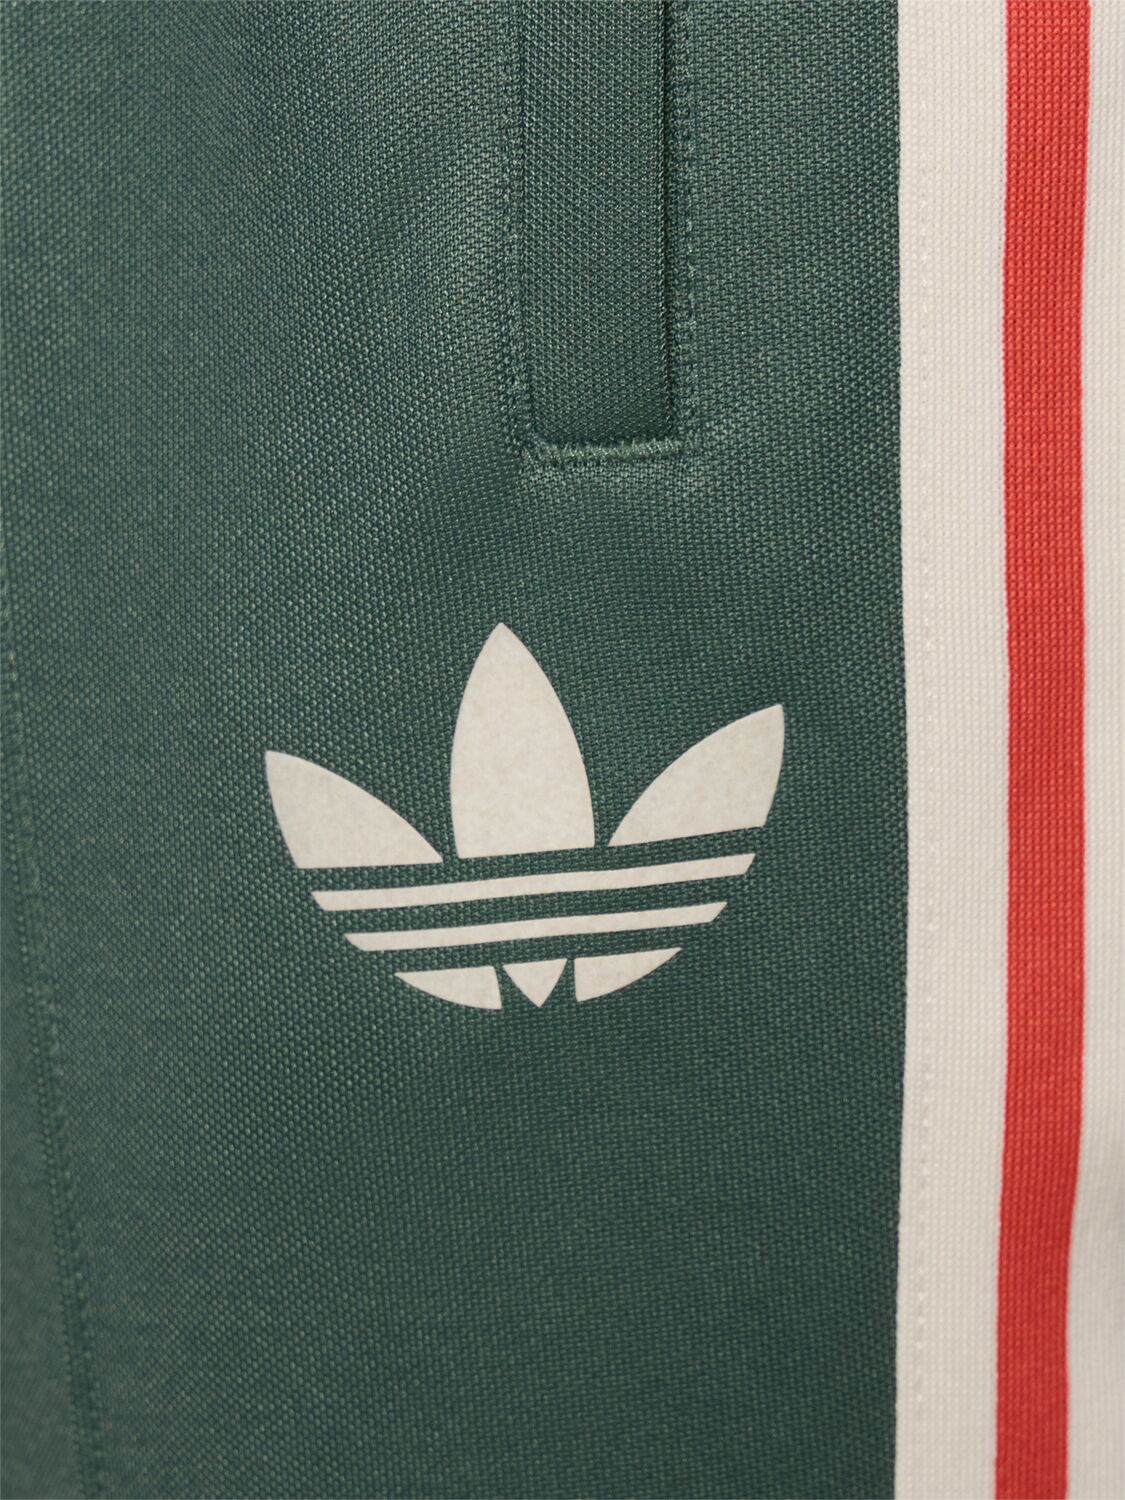 Shop Adidas Originals Mexico Track Pants In Green Oxide